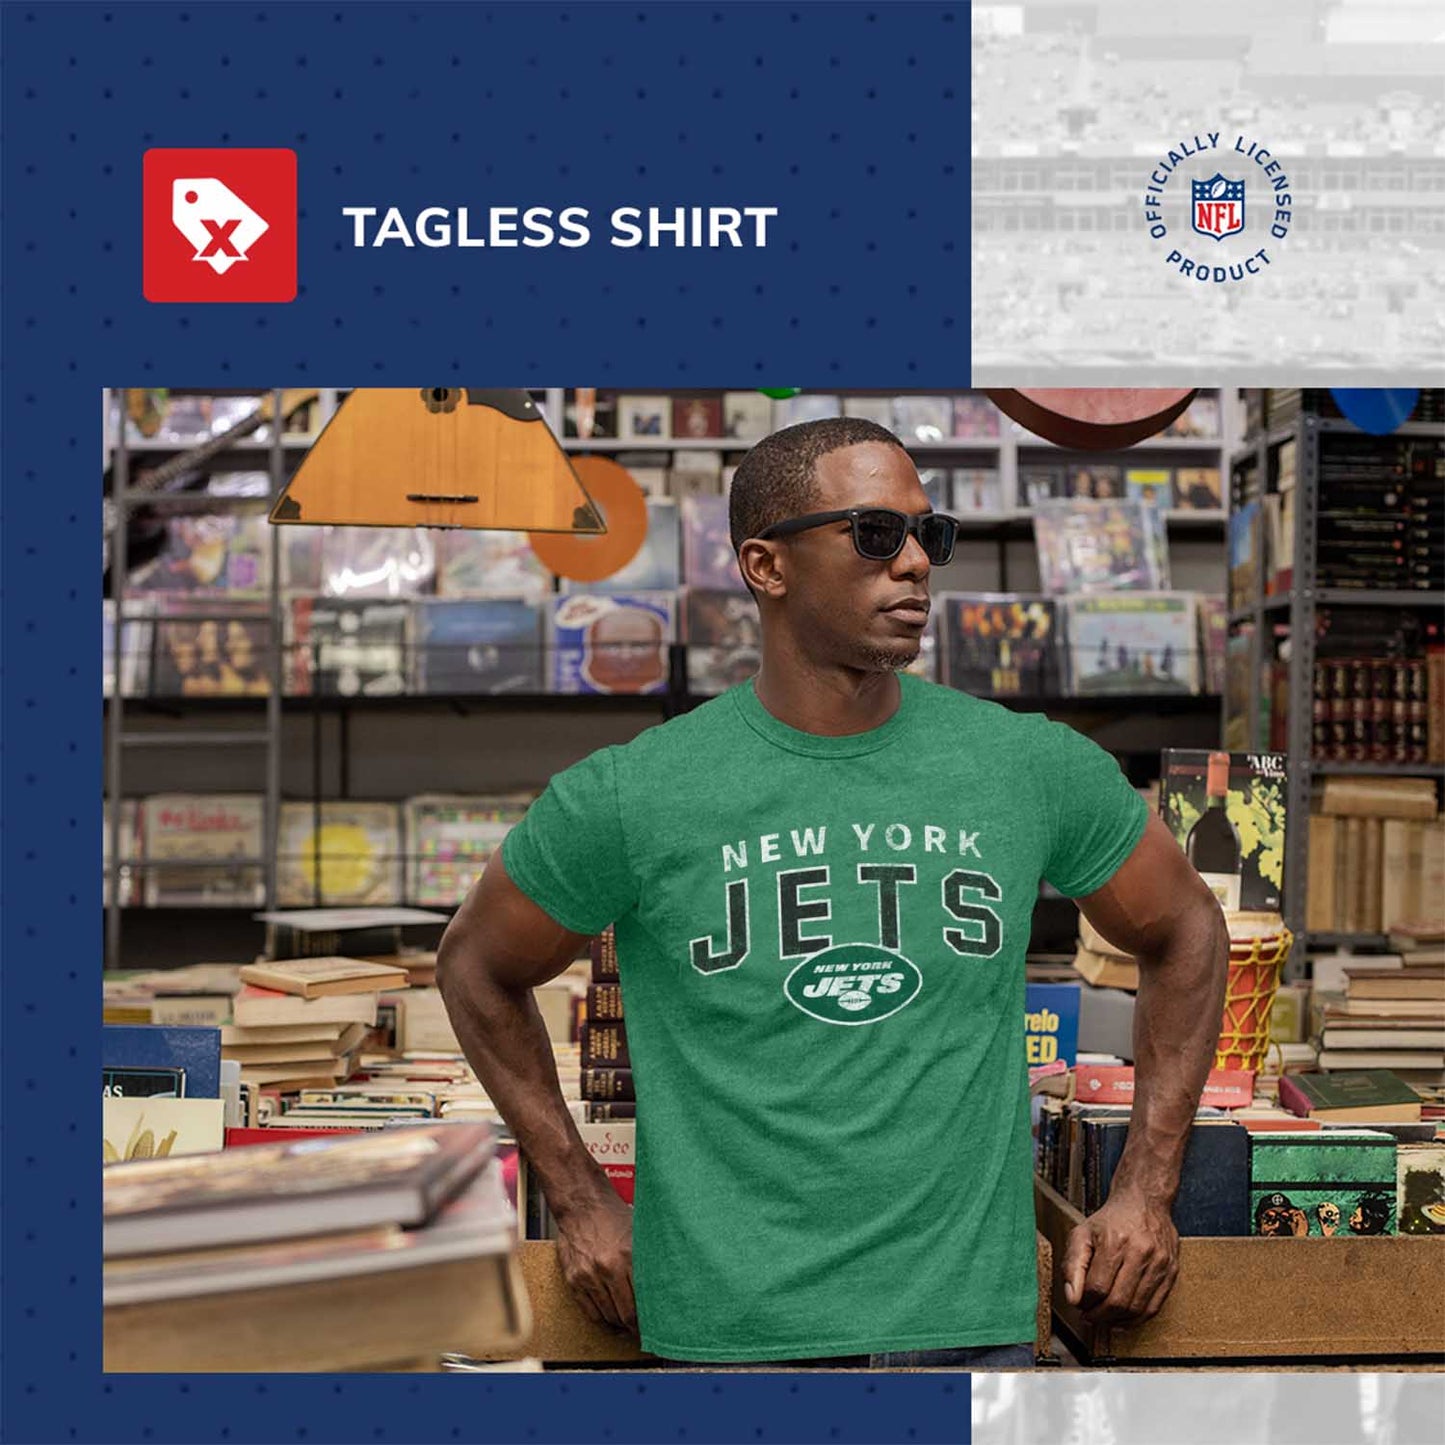 New York Jets NFL Starting Fresh Short Sleeve Heather T-Shirt - Green